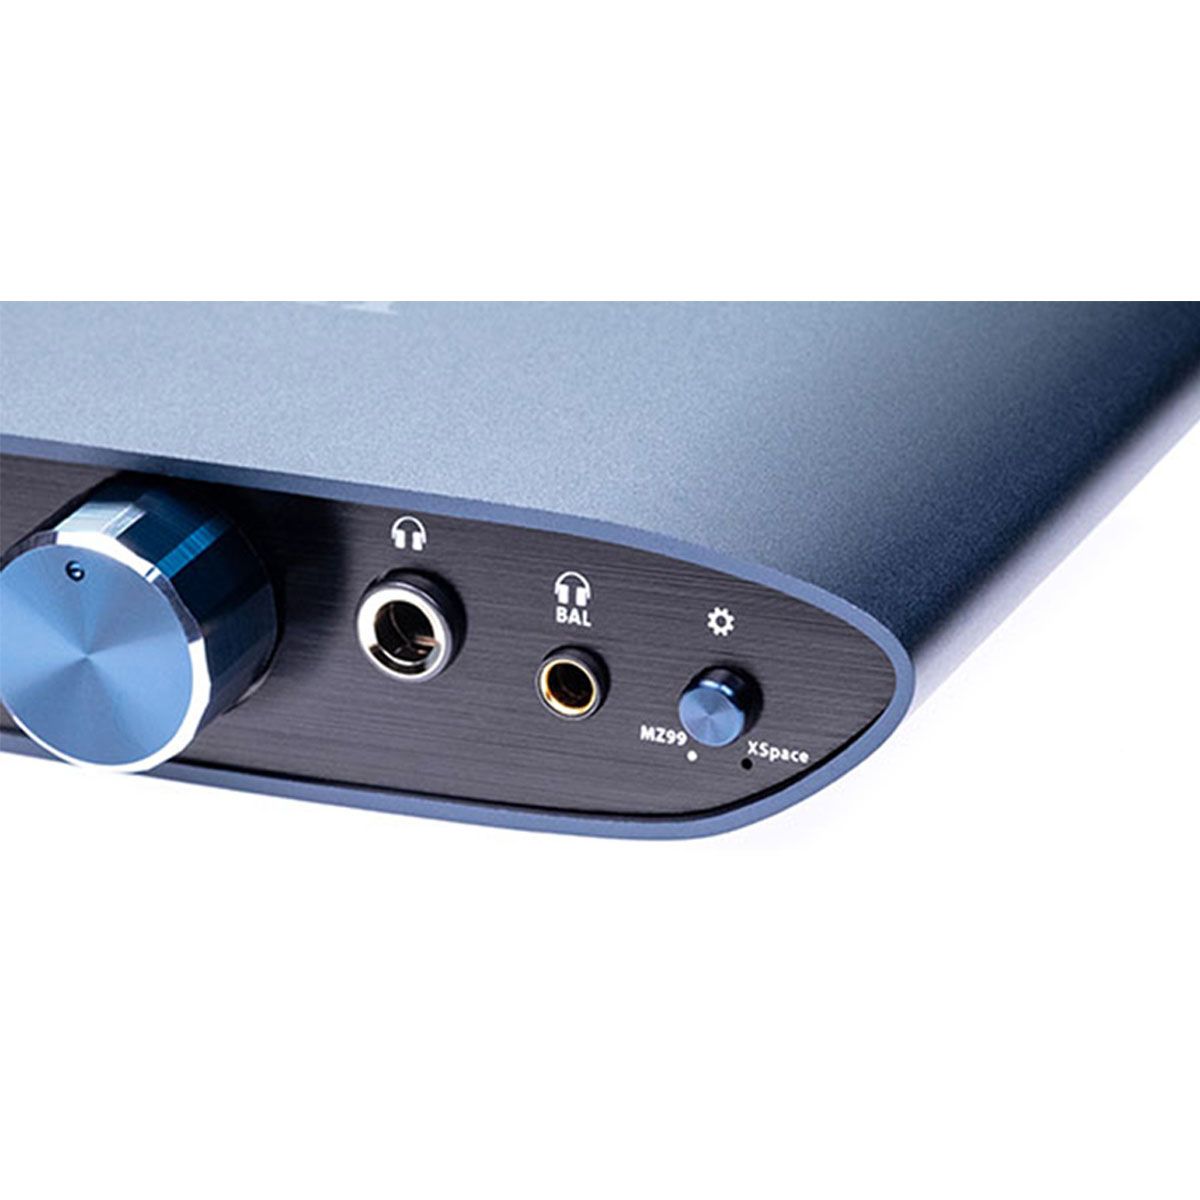 iFi Audio ZEN CAN Signature MZ99 Premium Desk-Fi Headphone Amp - zoomed view of front components